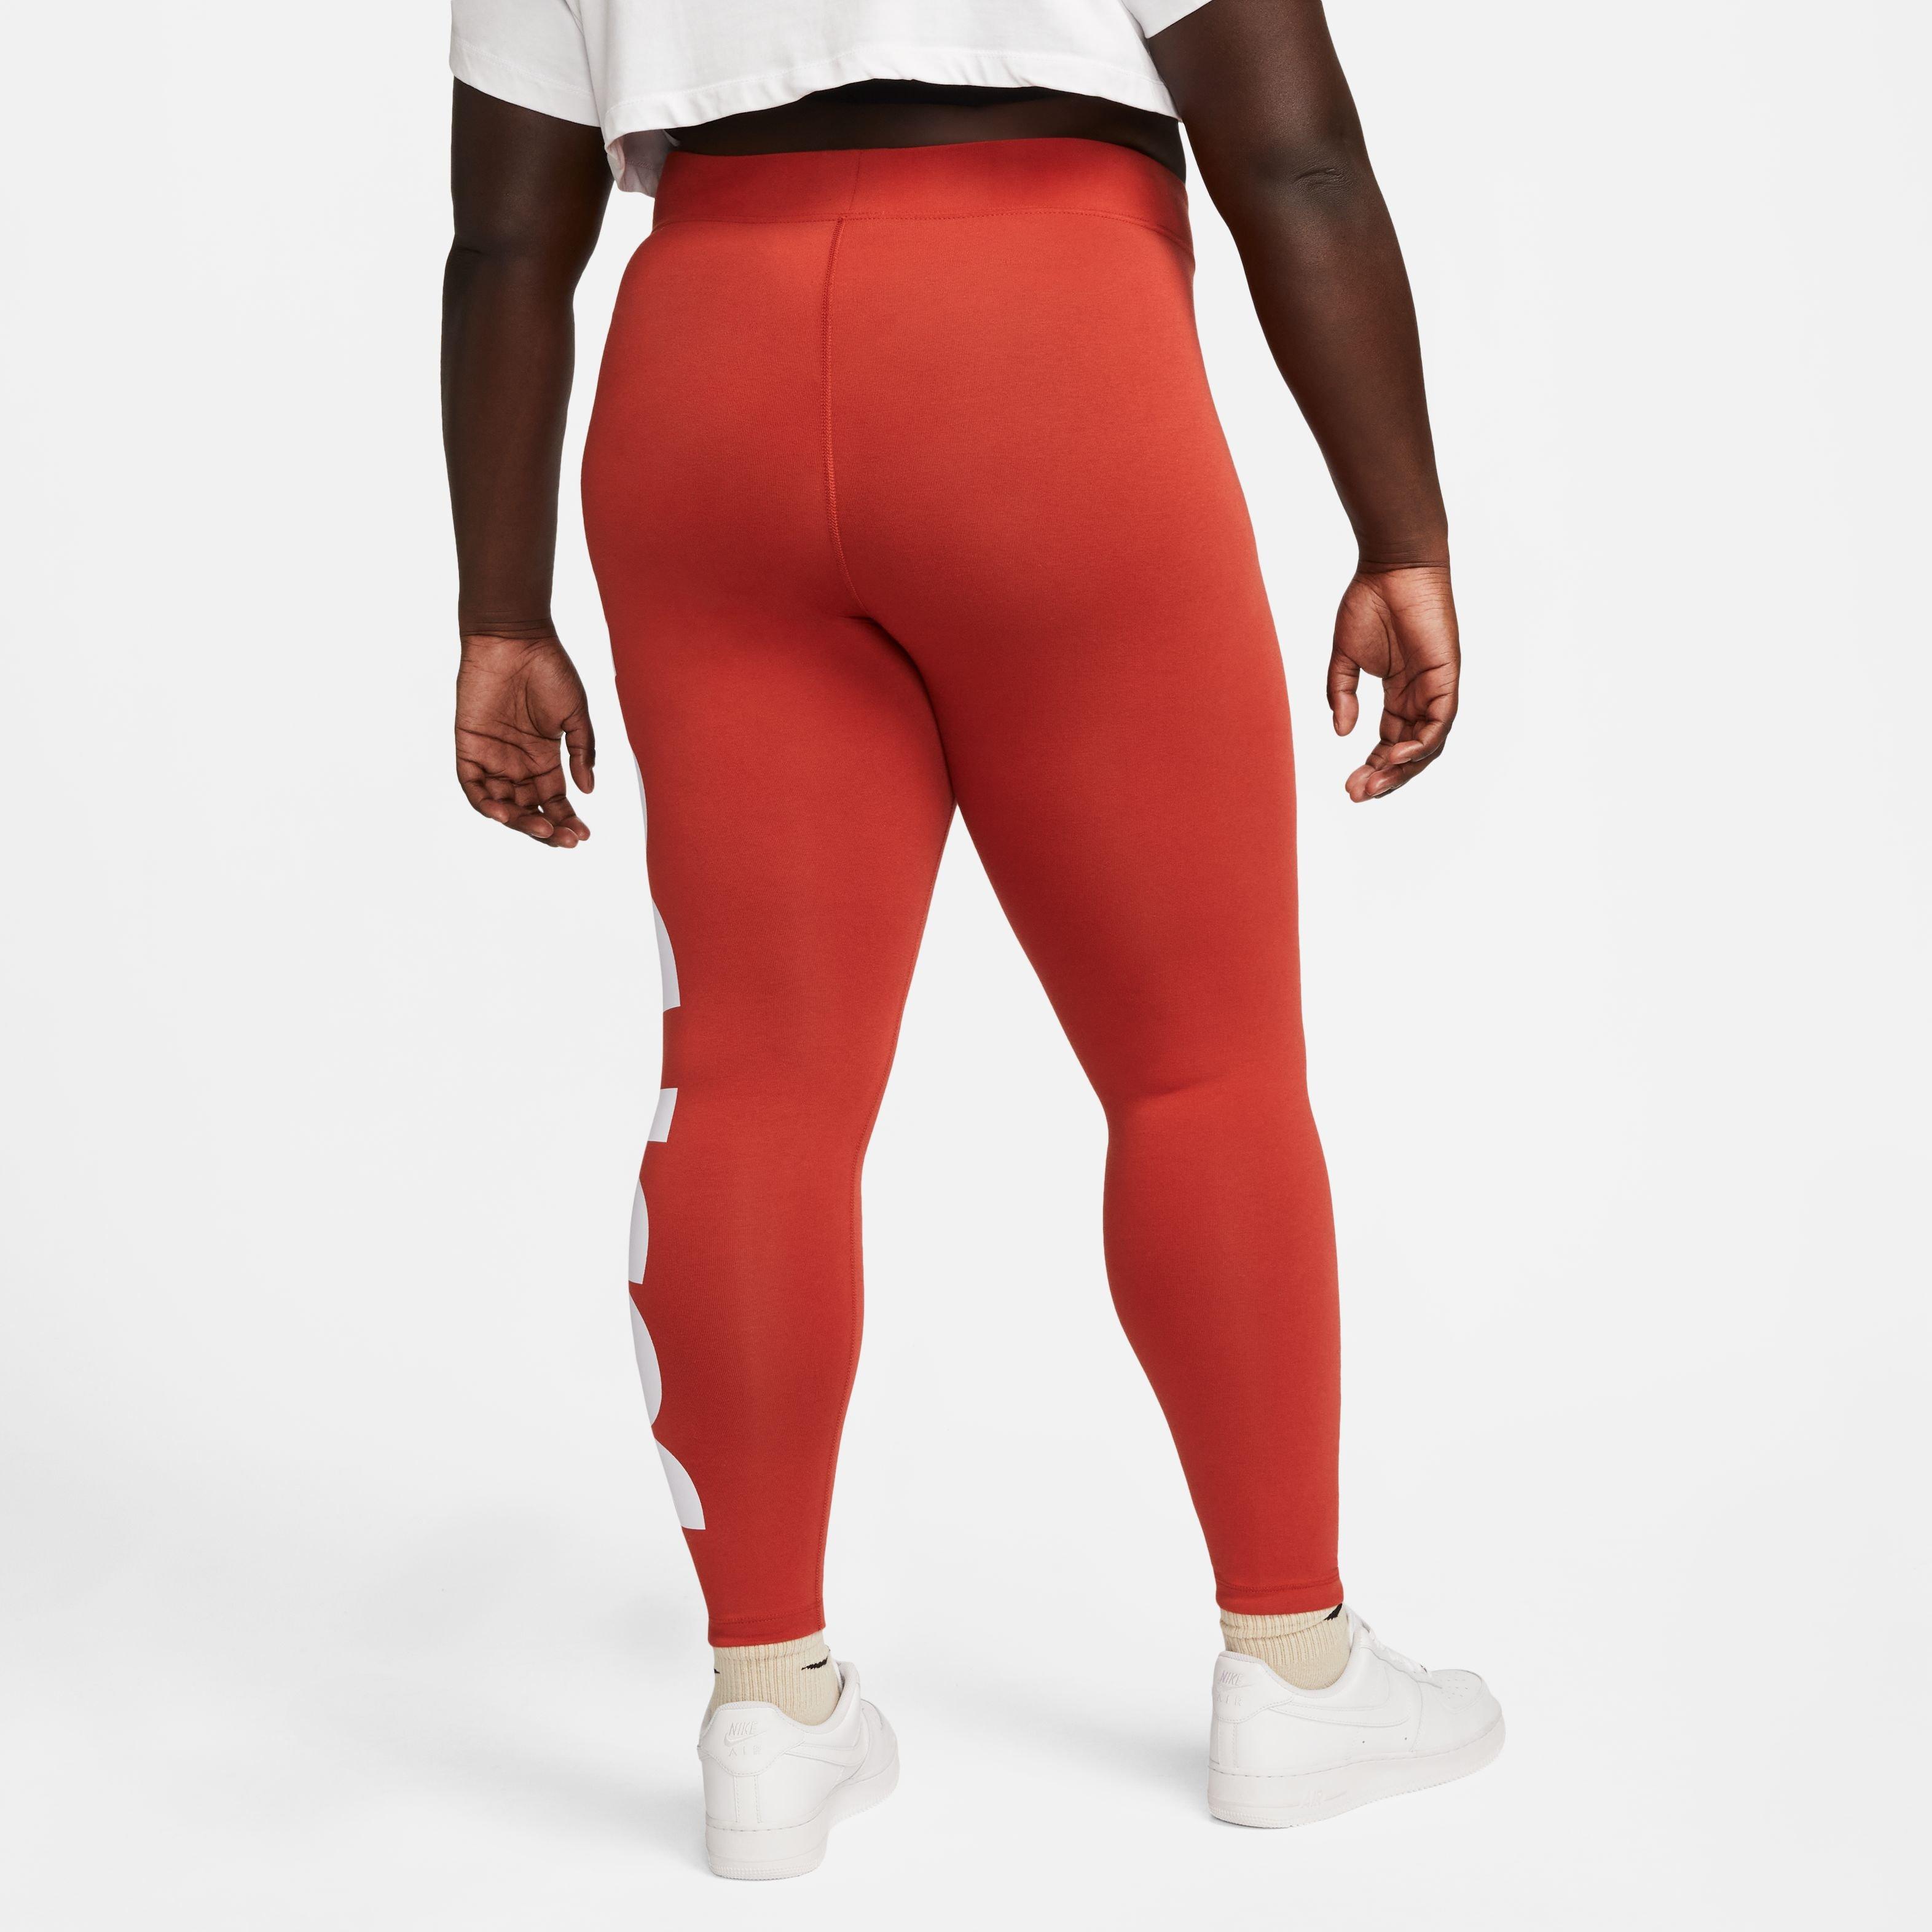 NWT Women's Nike One Tights Yoga Pants Burgundy Full Length Size